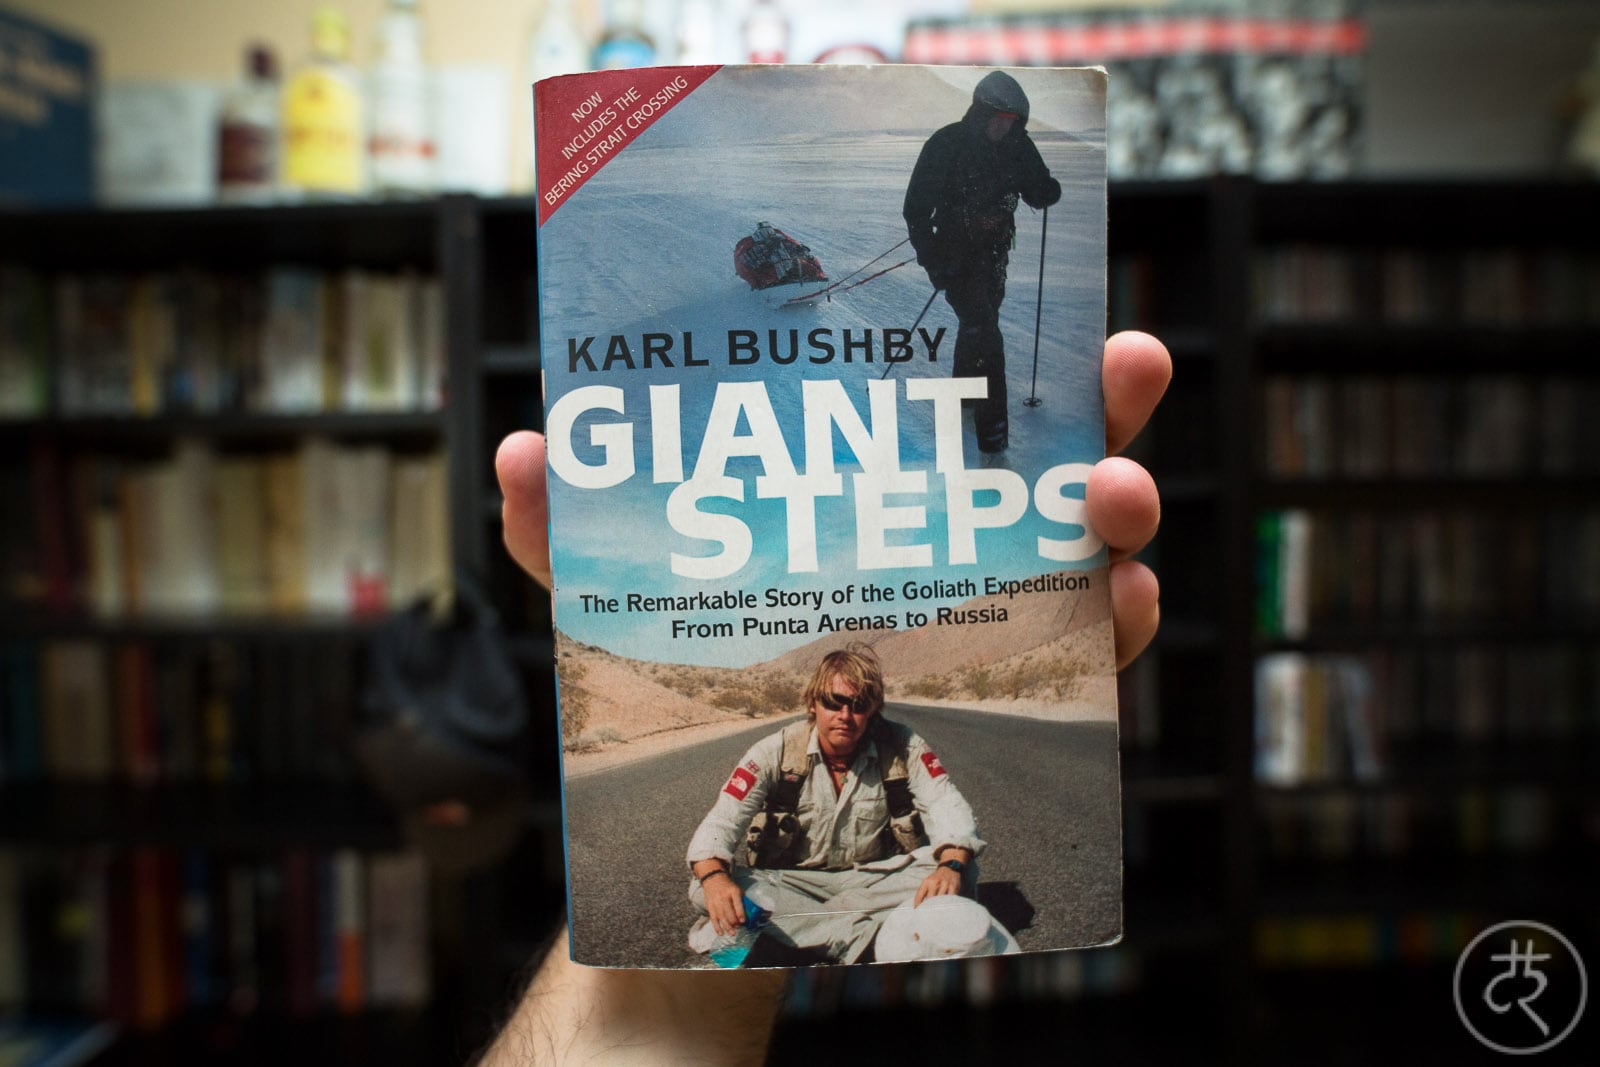 Karl Bushby's "Giant Steps"